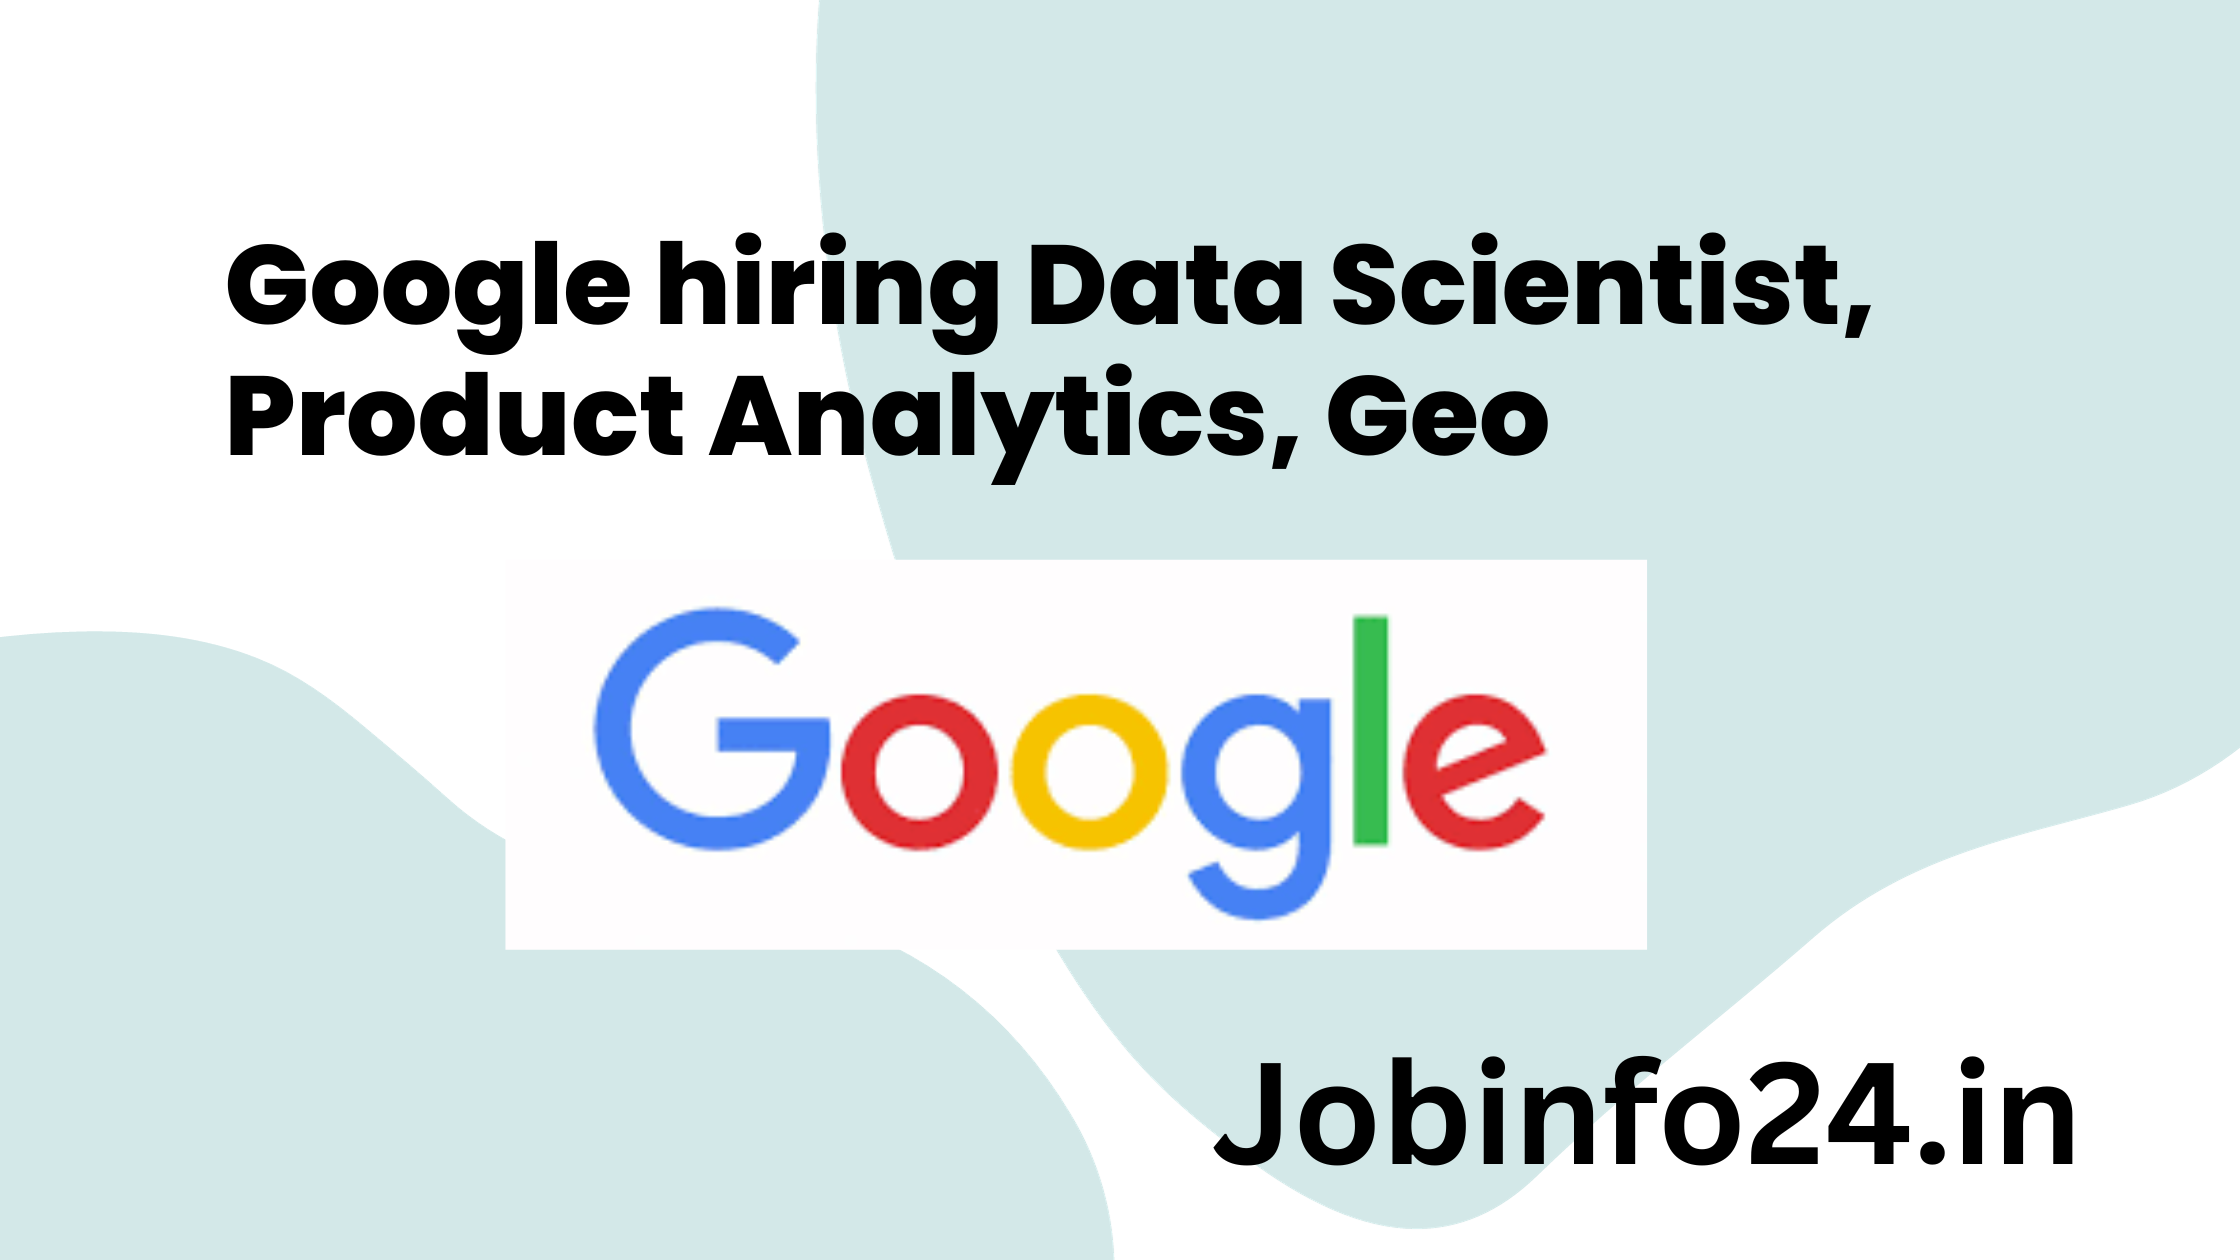 Google hiring Data Scientist, Product Analytics, Geo